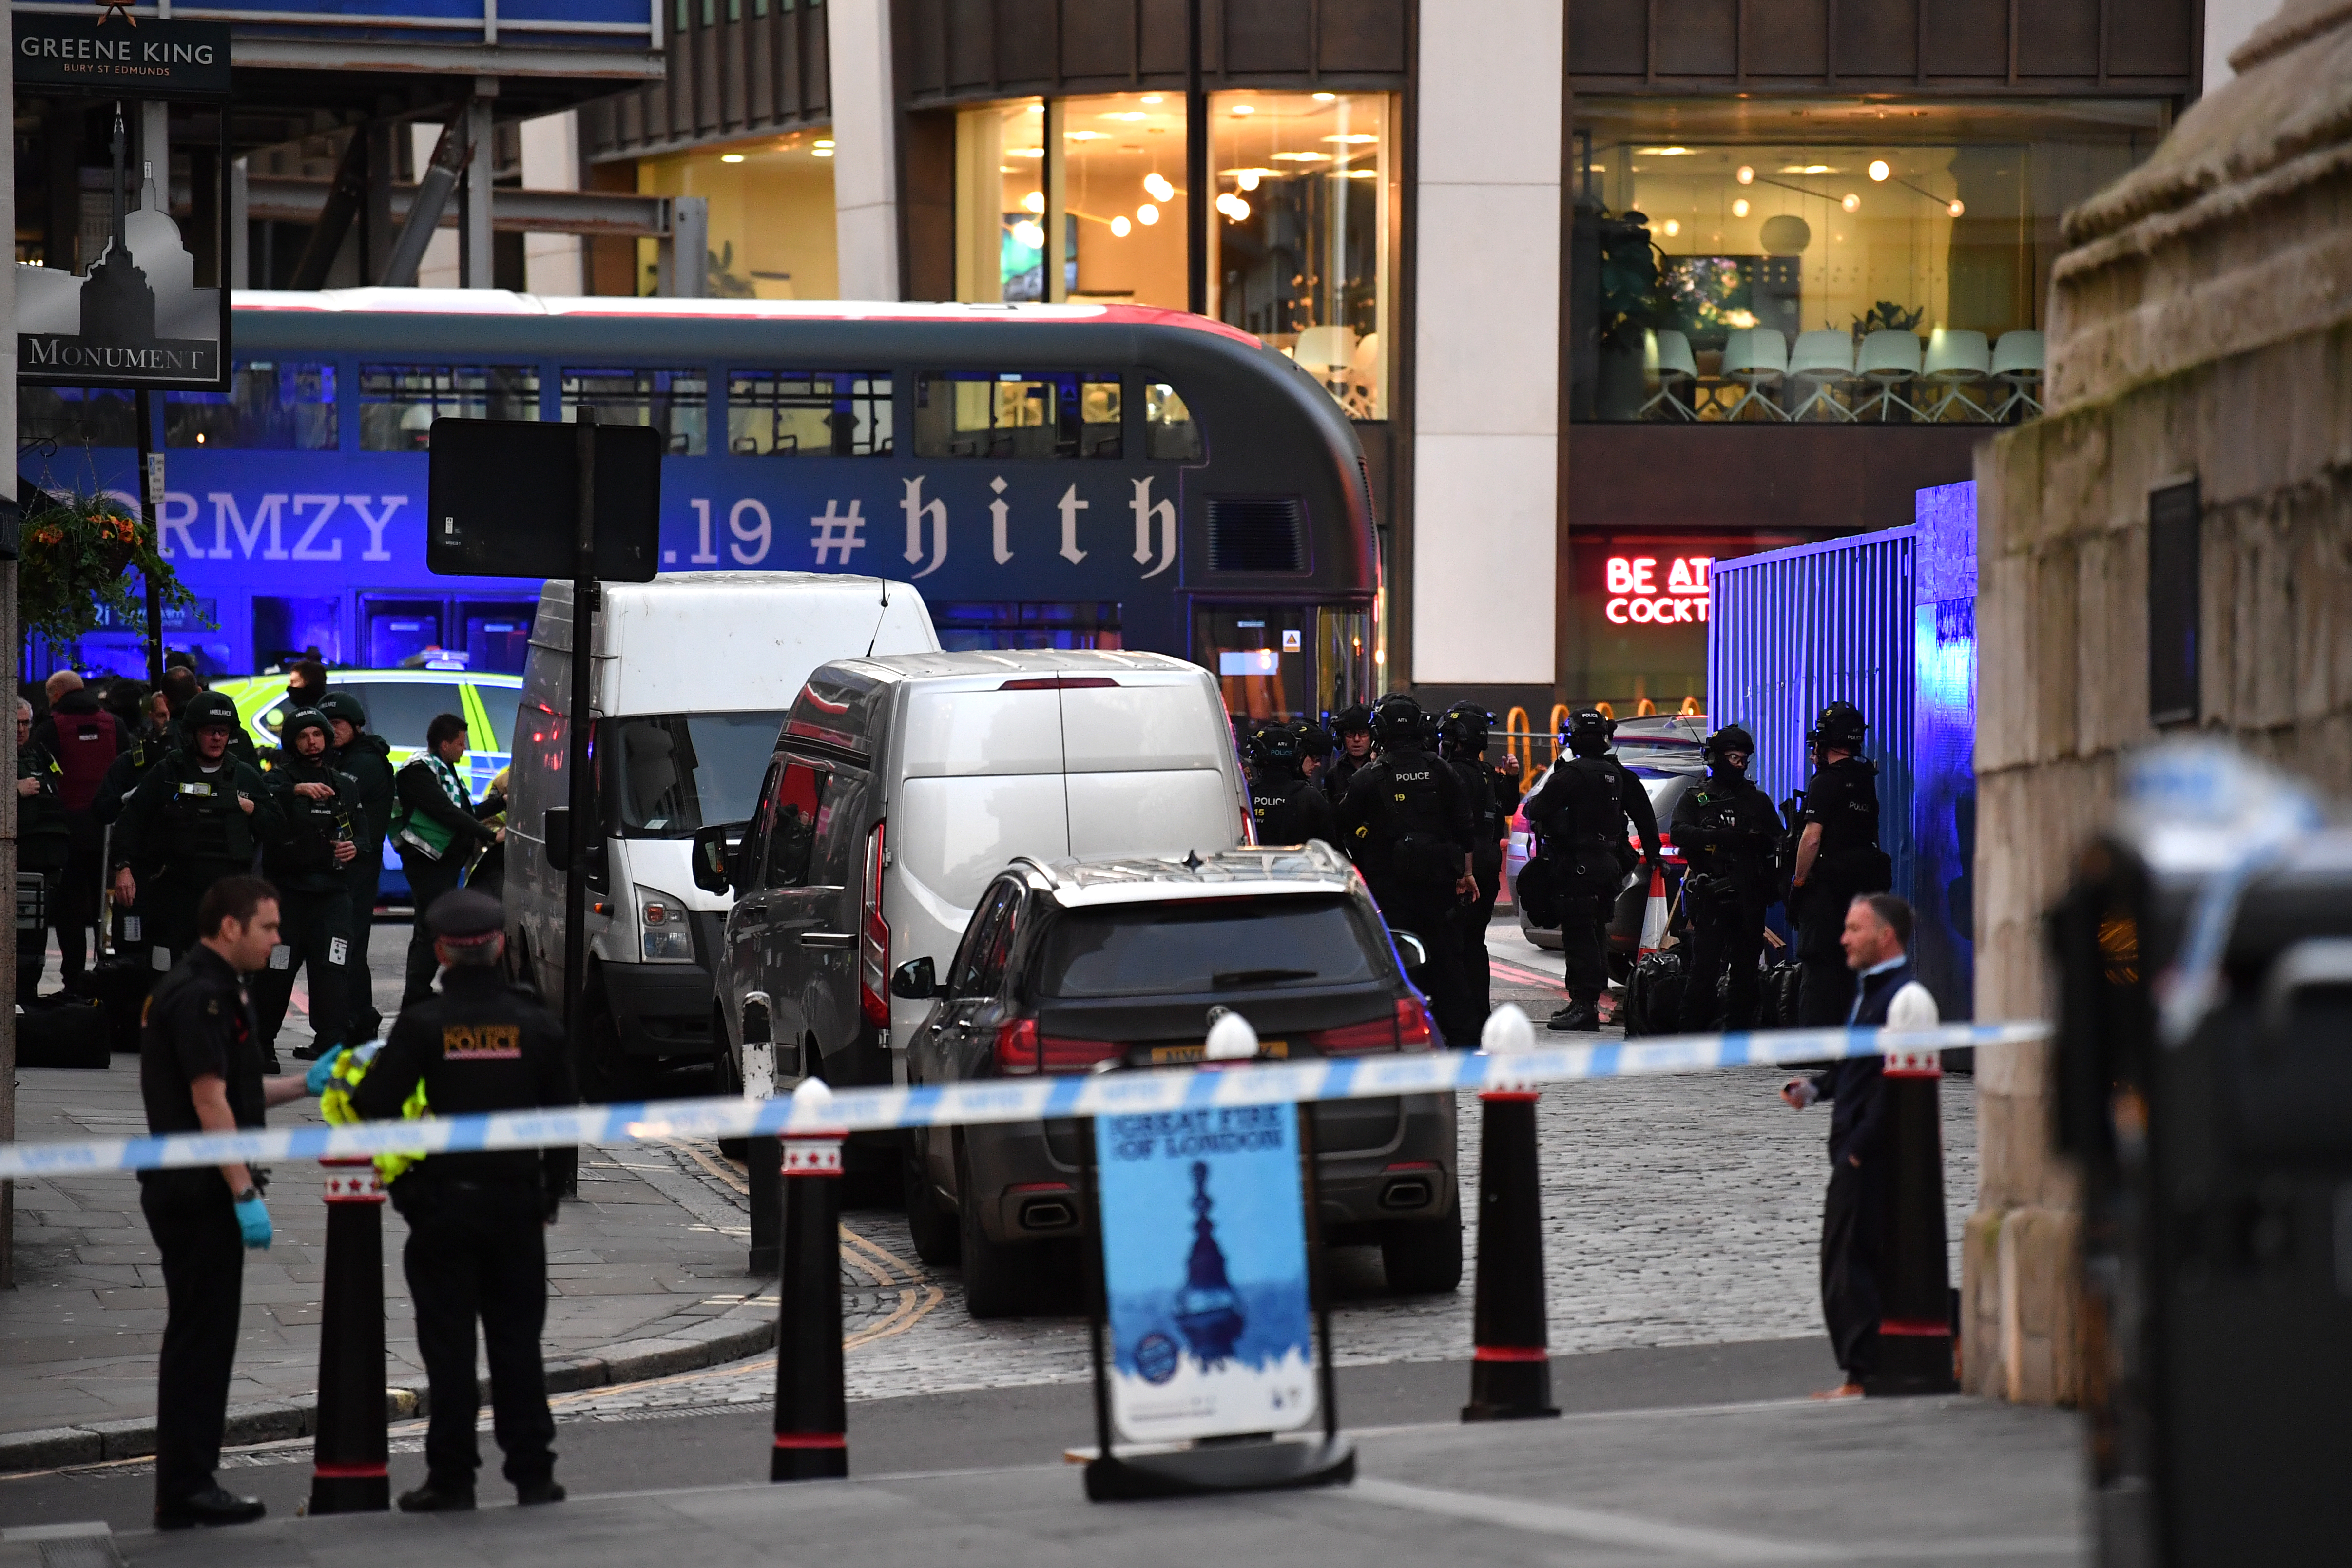 Sospechoso de ataque en Londres cargaba un paquete explosivo falso